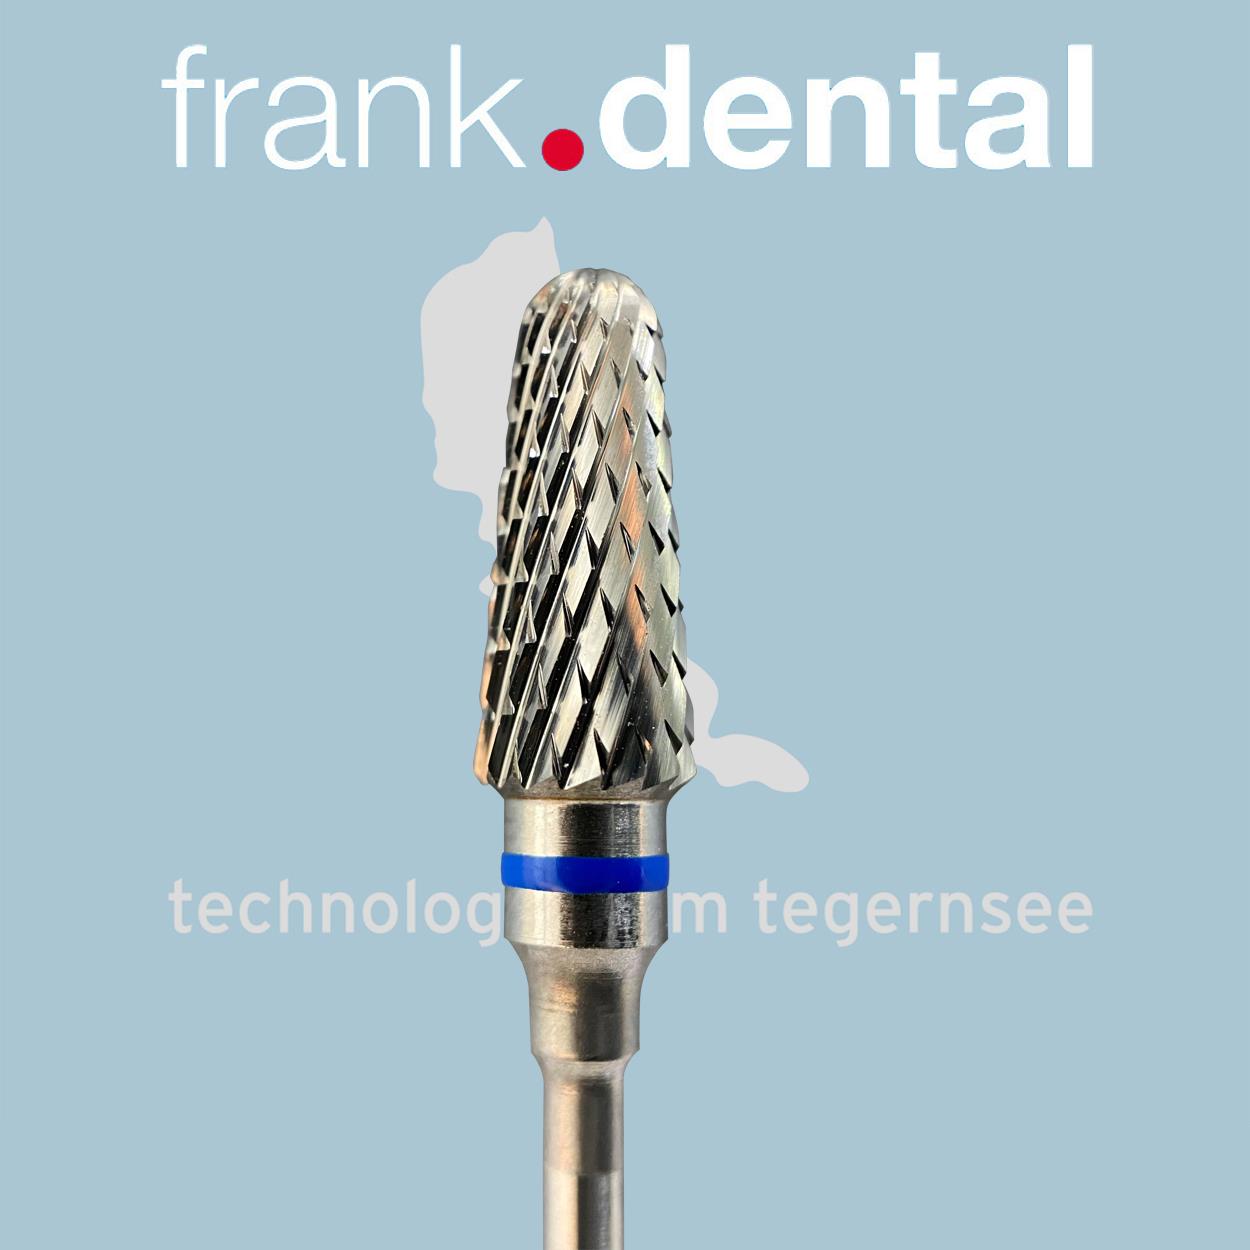 DentrealStore - Frank Dental Frank Dental Tungsten Carbide Bur - Monster Bur for lab - 79K